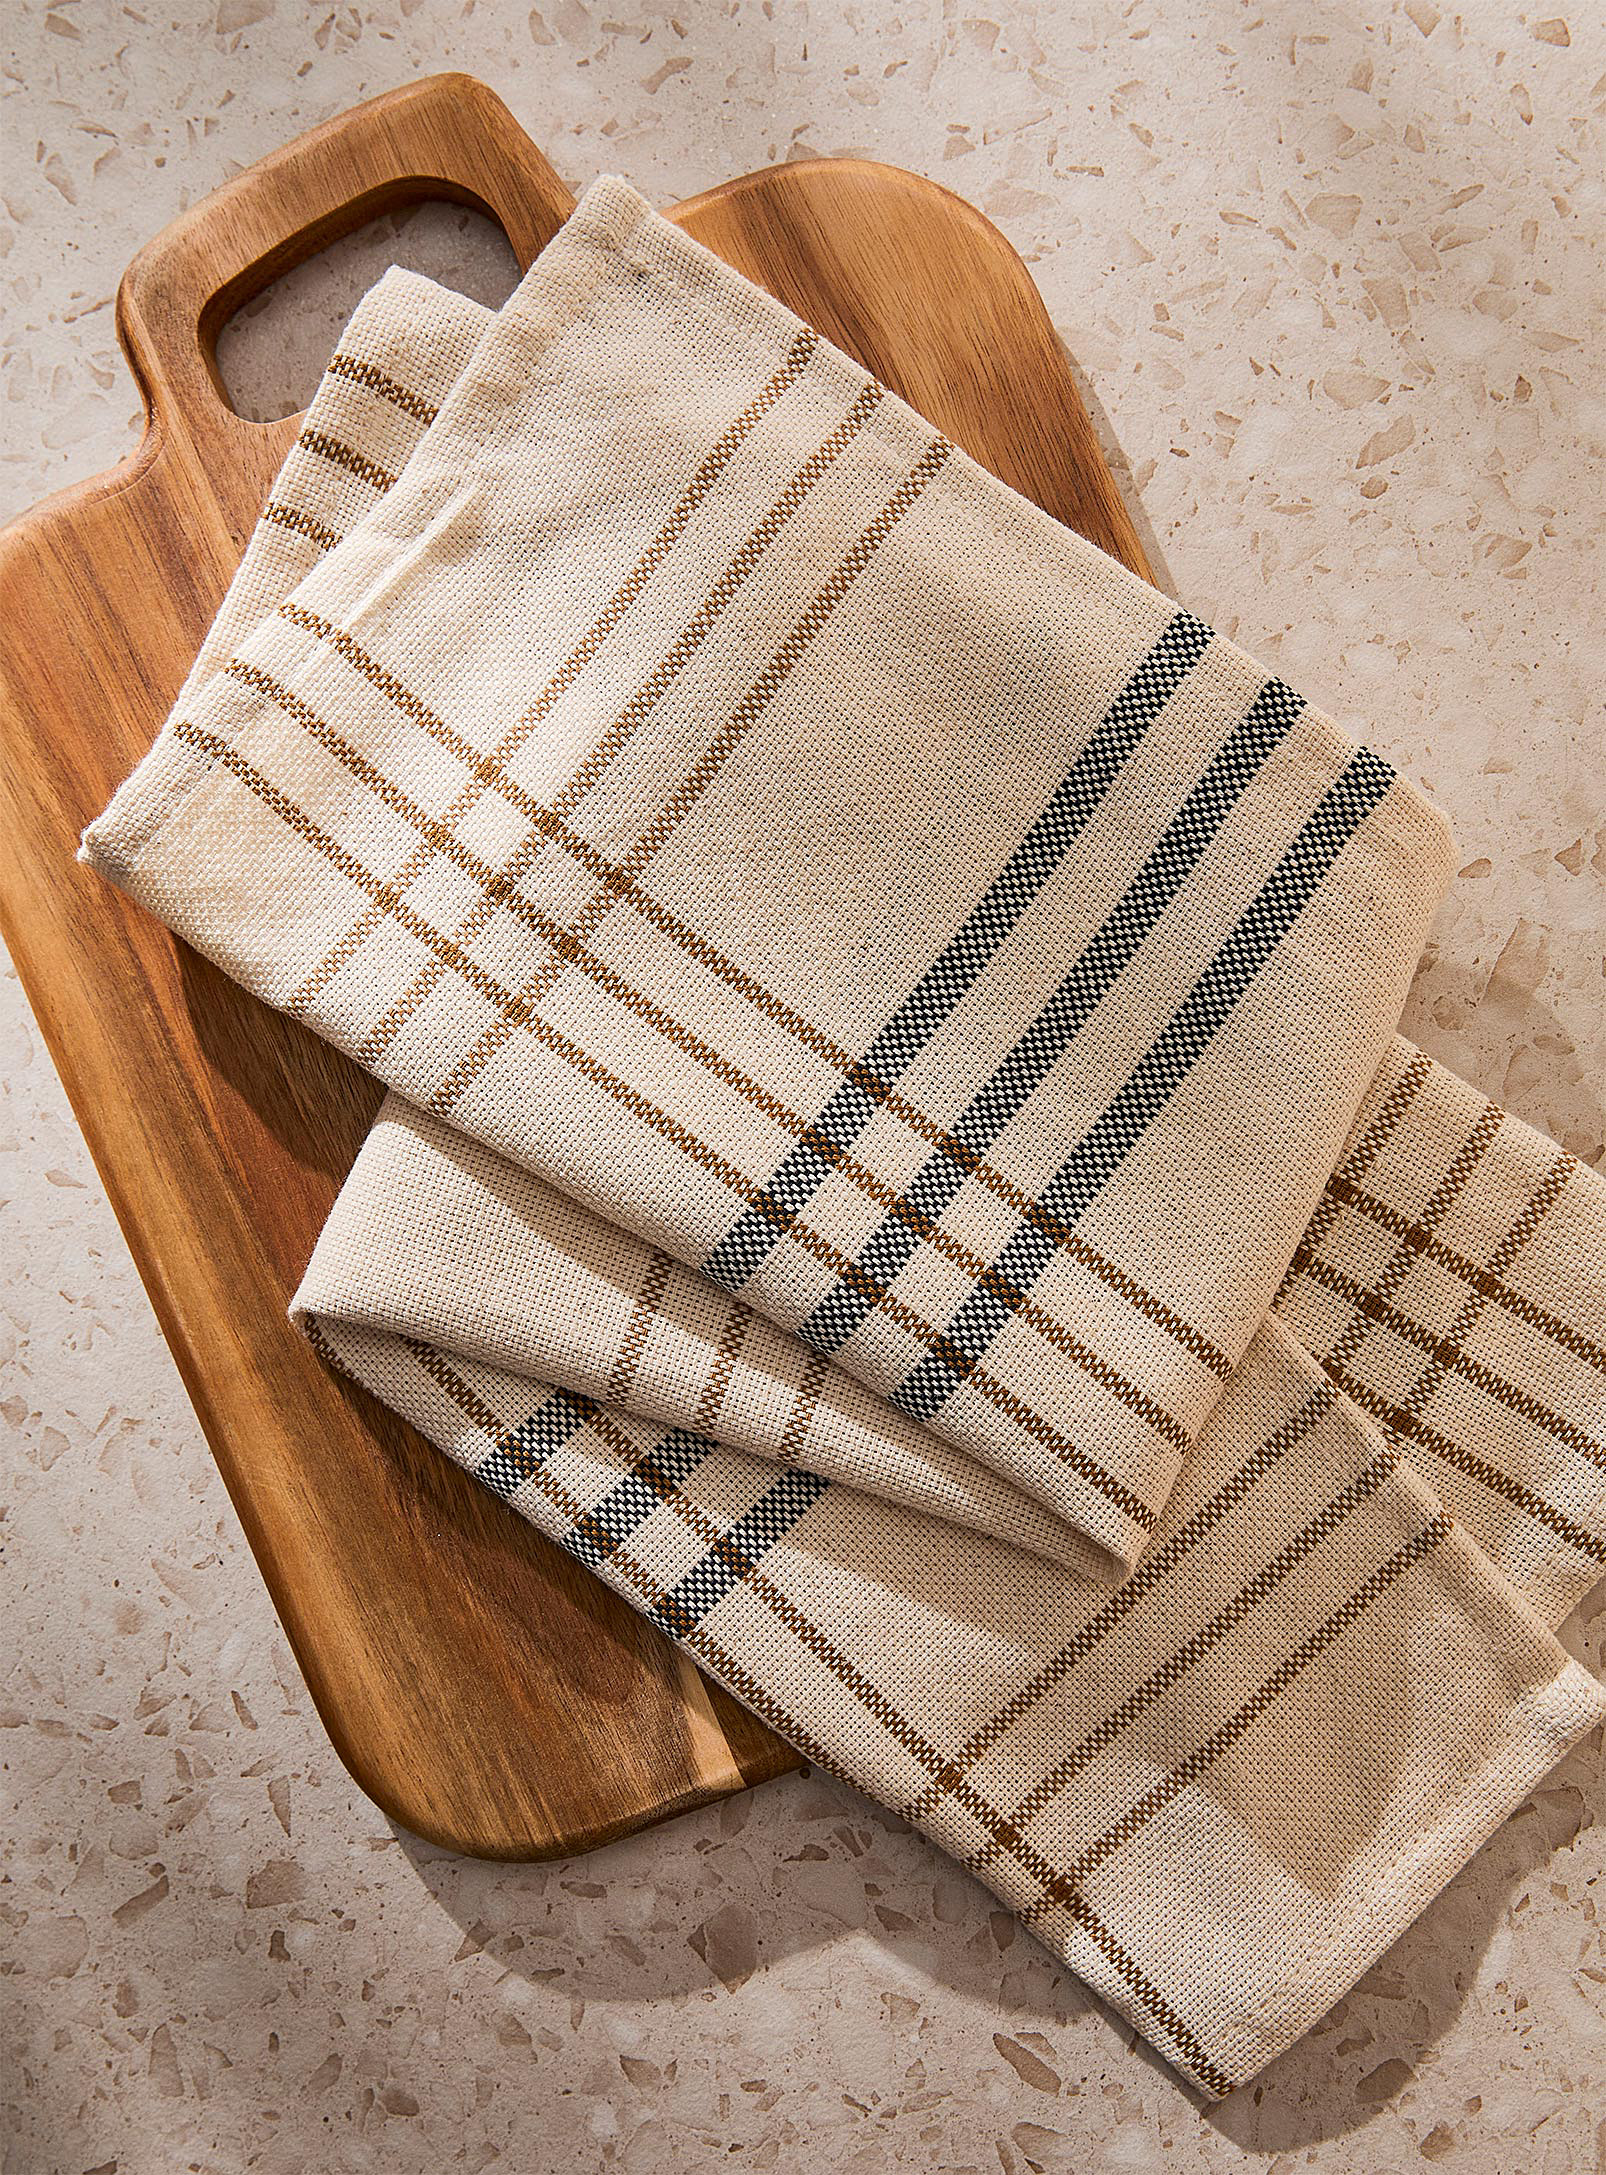 Simons Maison - Neutral tone plaid organic cotton tea towel